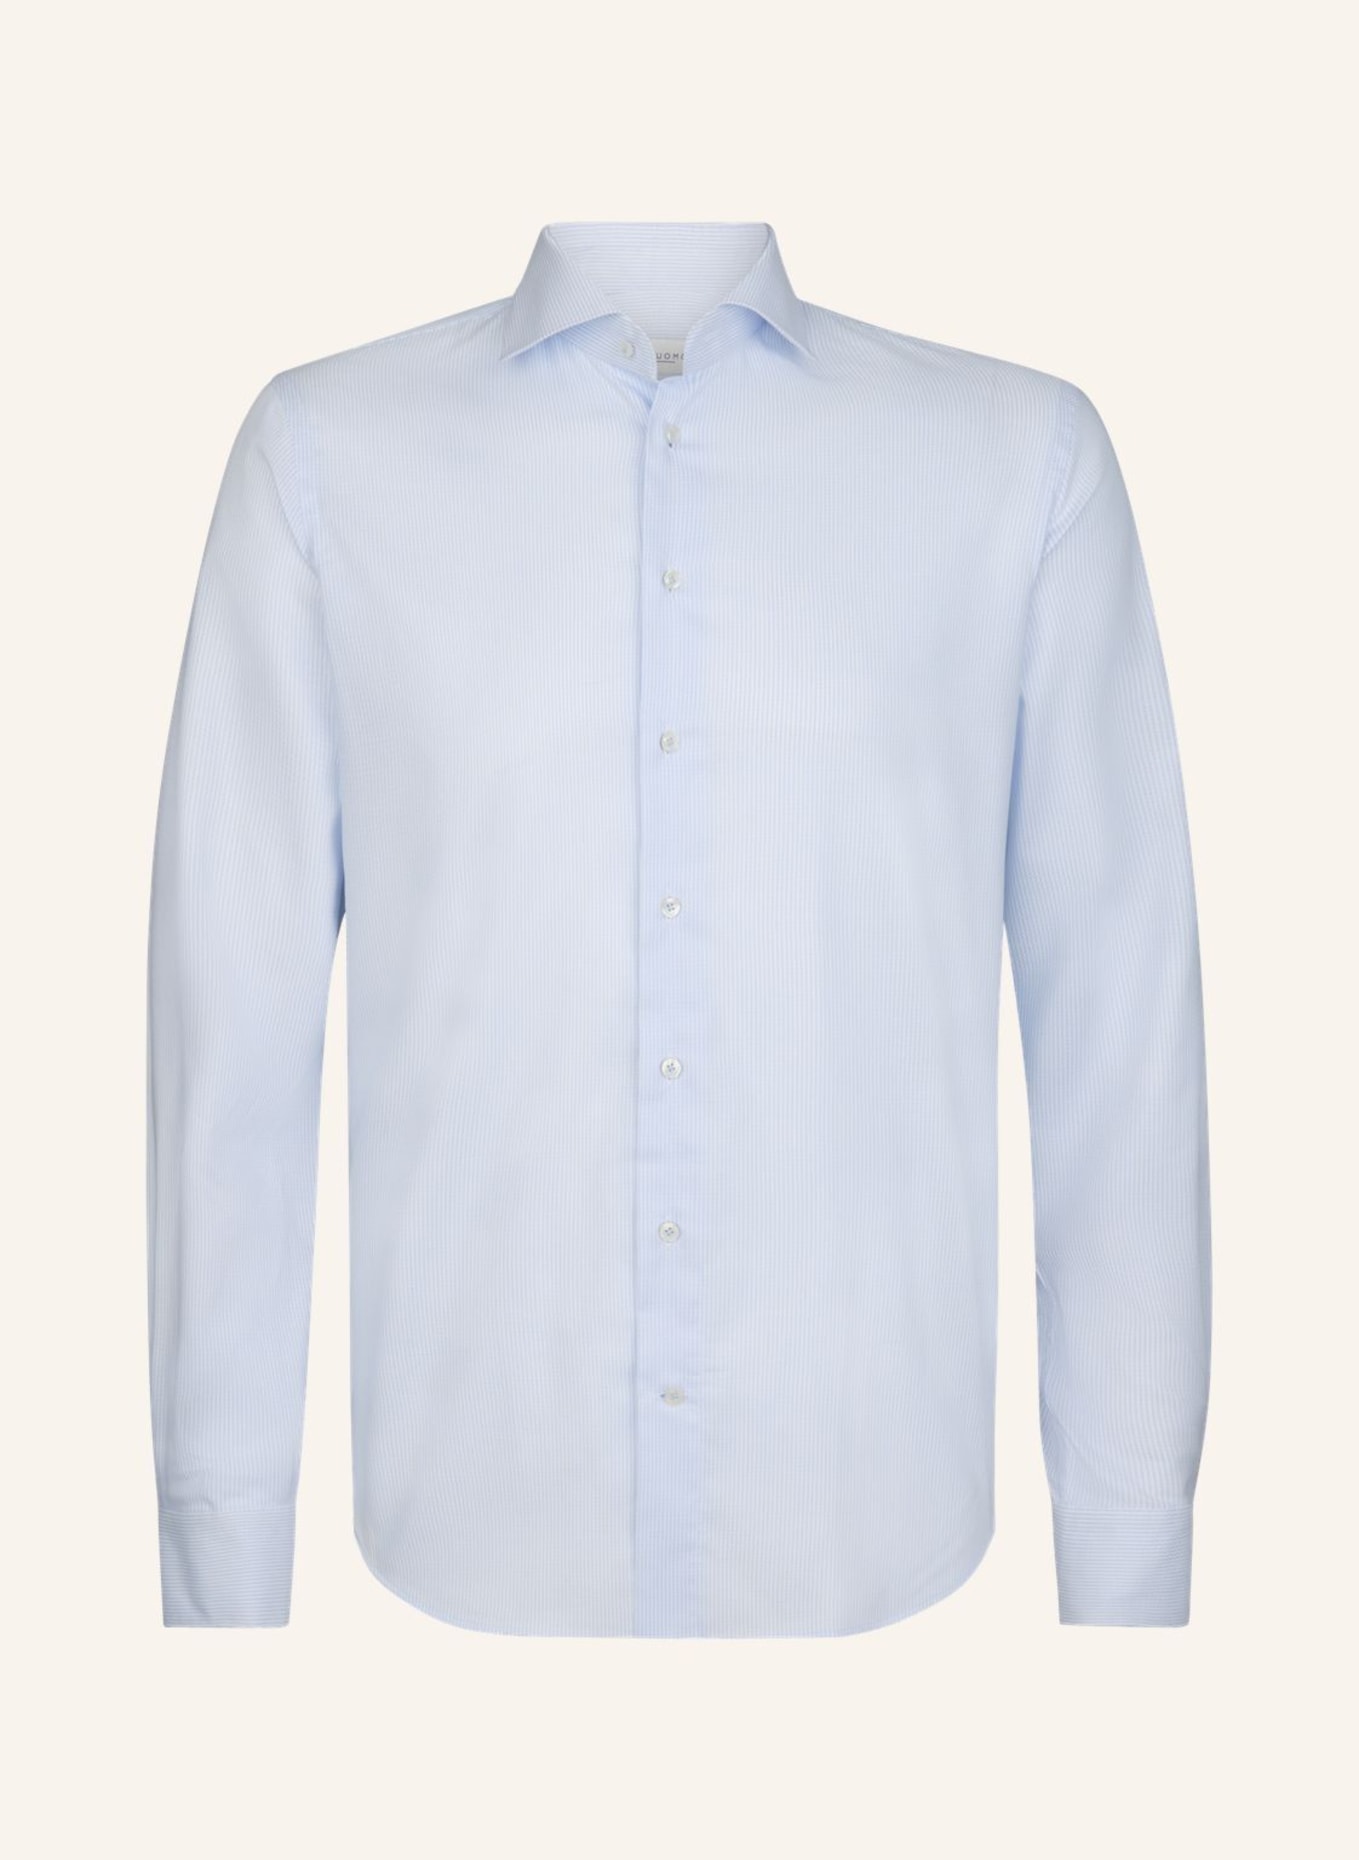 PROFUOMO Hemd Slim Fit, Farbe: BLAU/ BLAUGRAU/ DUNKELBLAU (Bild 1)